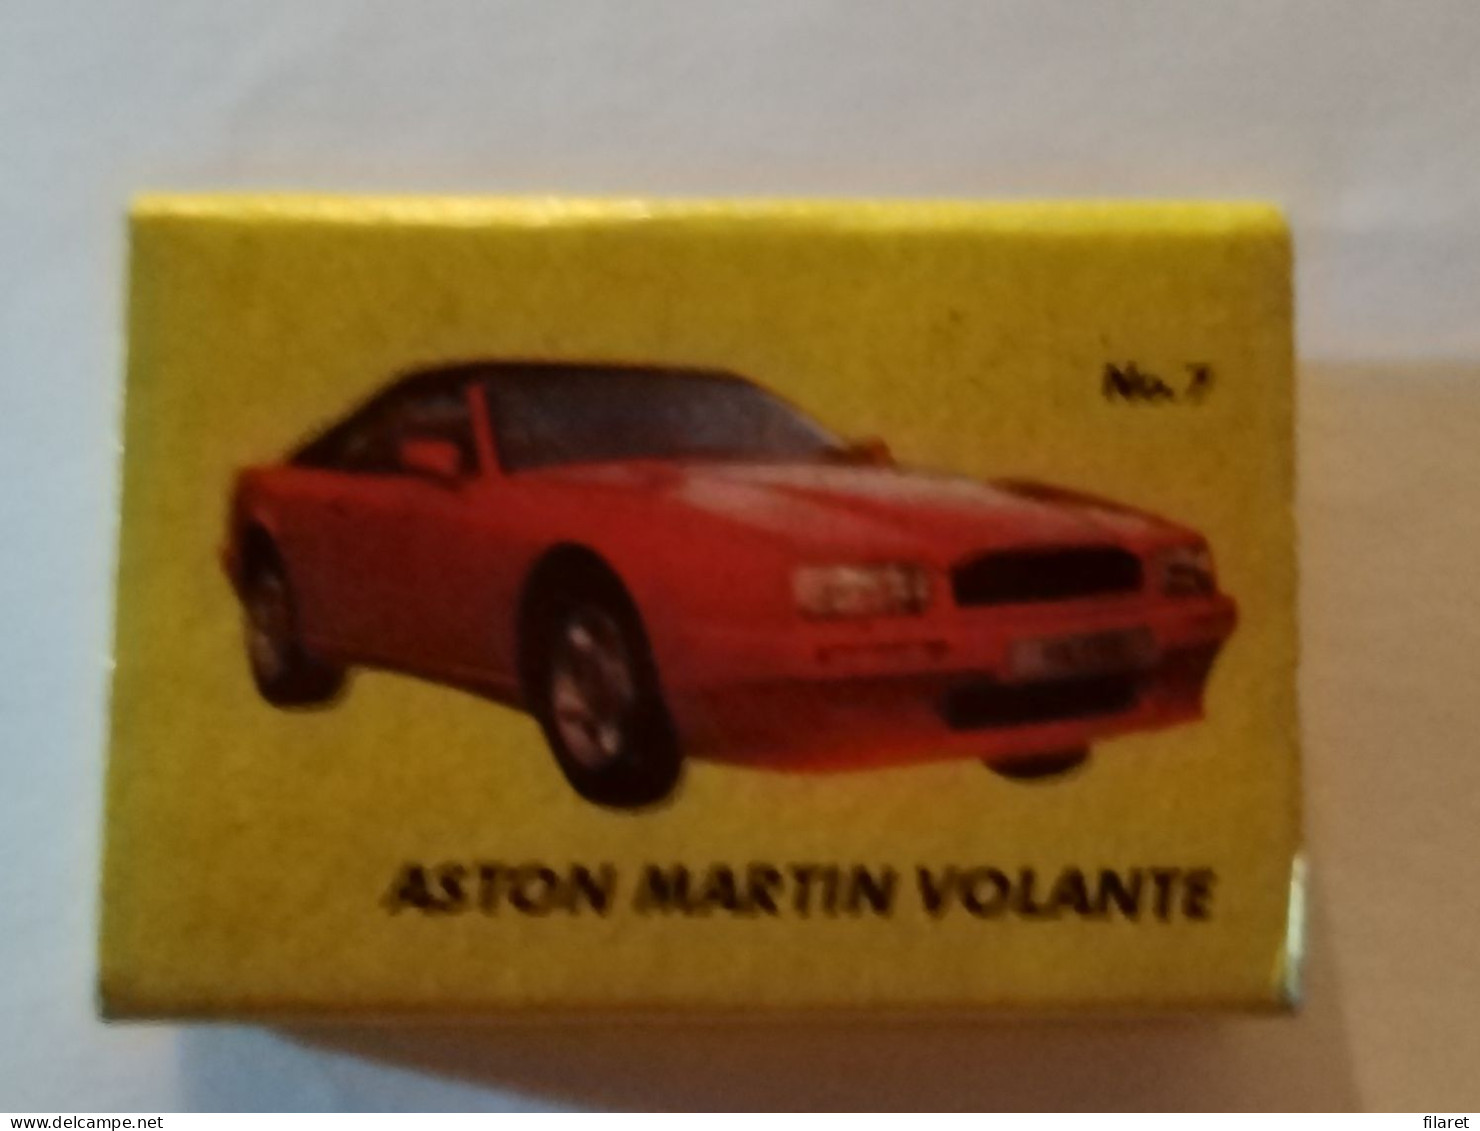 Aston Martin Volante, Car/automobile,MALAZLAR FACTORY,Turcia,matchbox - Boites D'allumettes